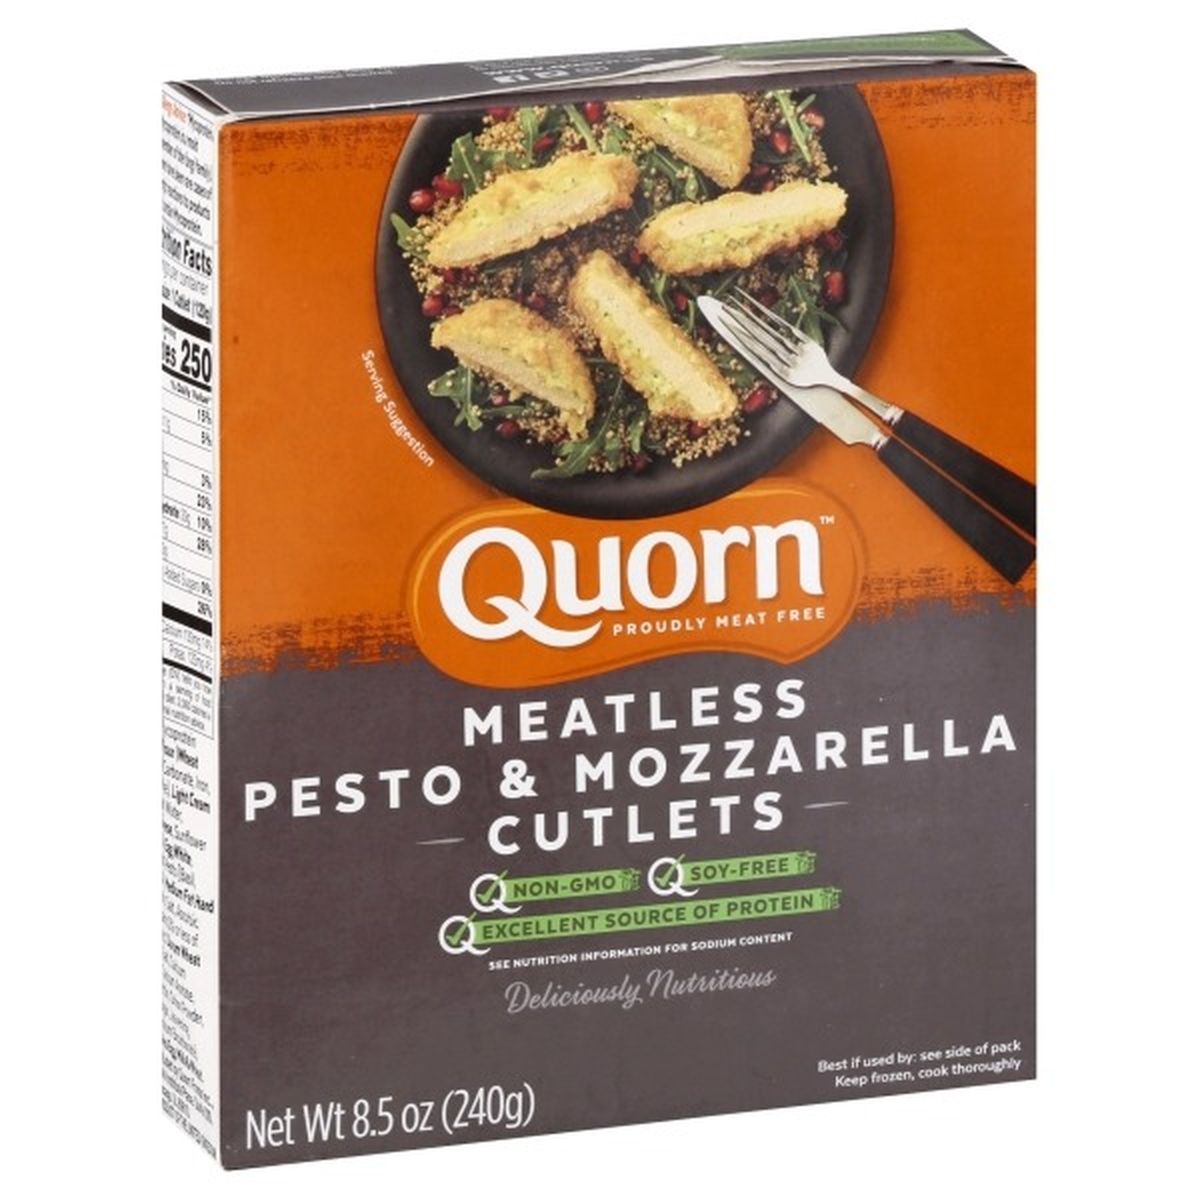 Calories in Quorn Cutlets, Meatless, Pesto & Mozzarella